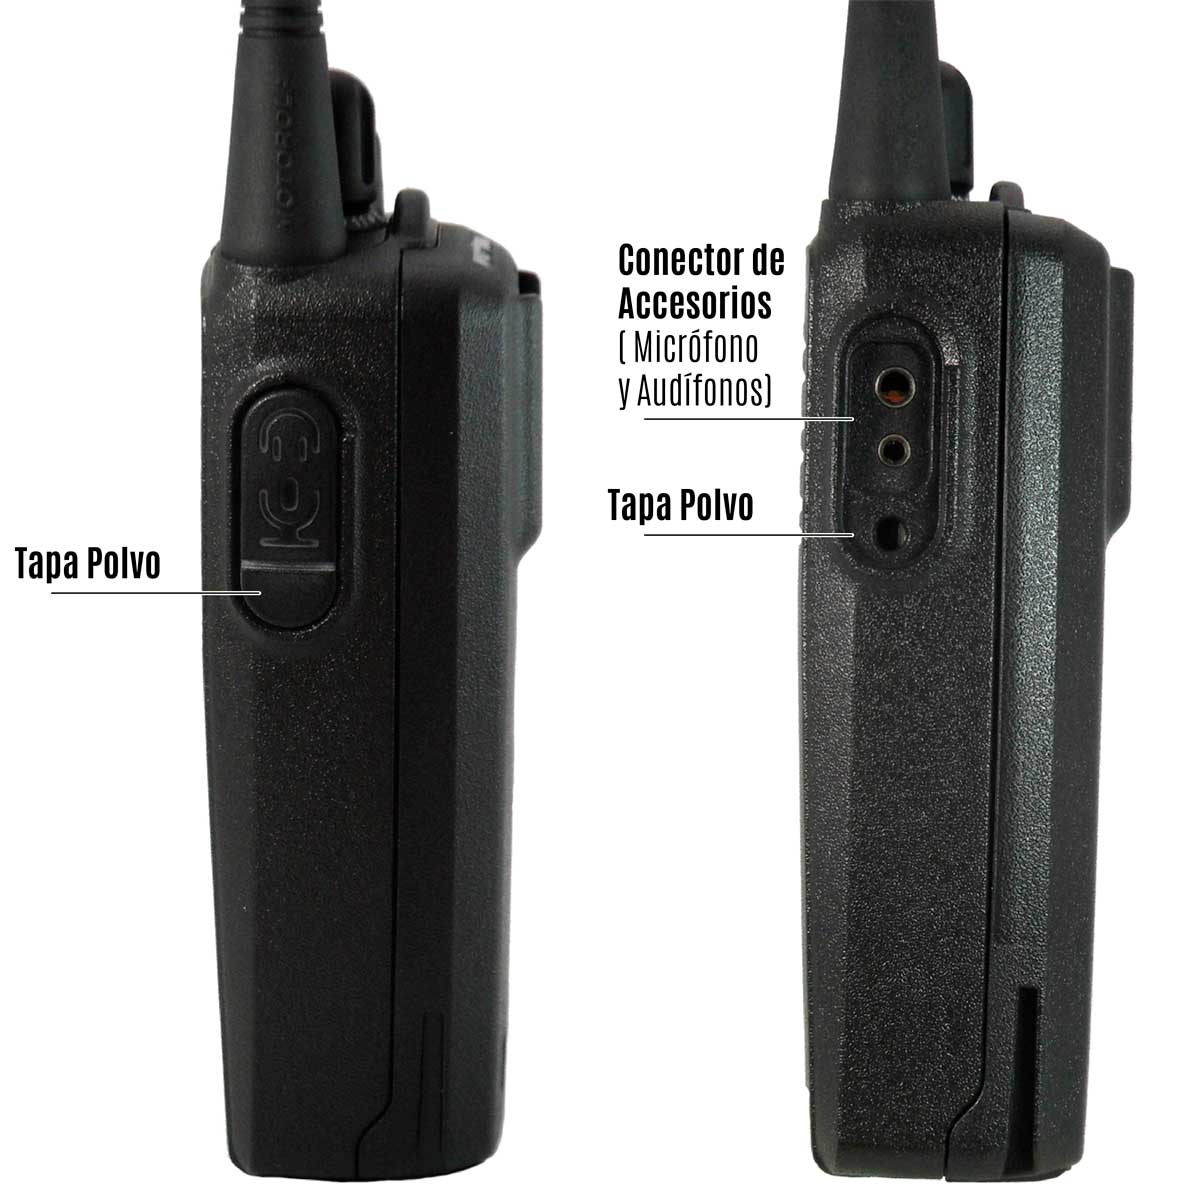 Radio Motorola EP350 MX Analógico LAH03KEK8AB7AN VHF 136-174 MHz con Pantalla y Teclado Completo